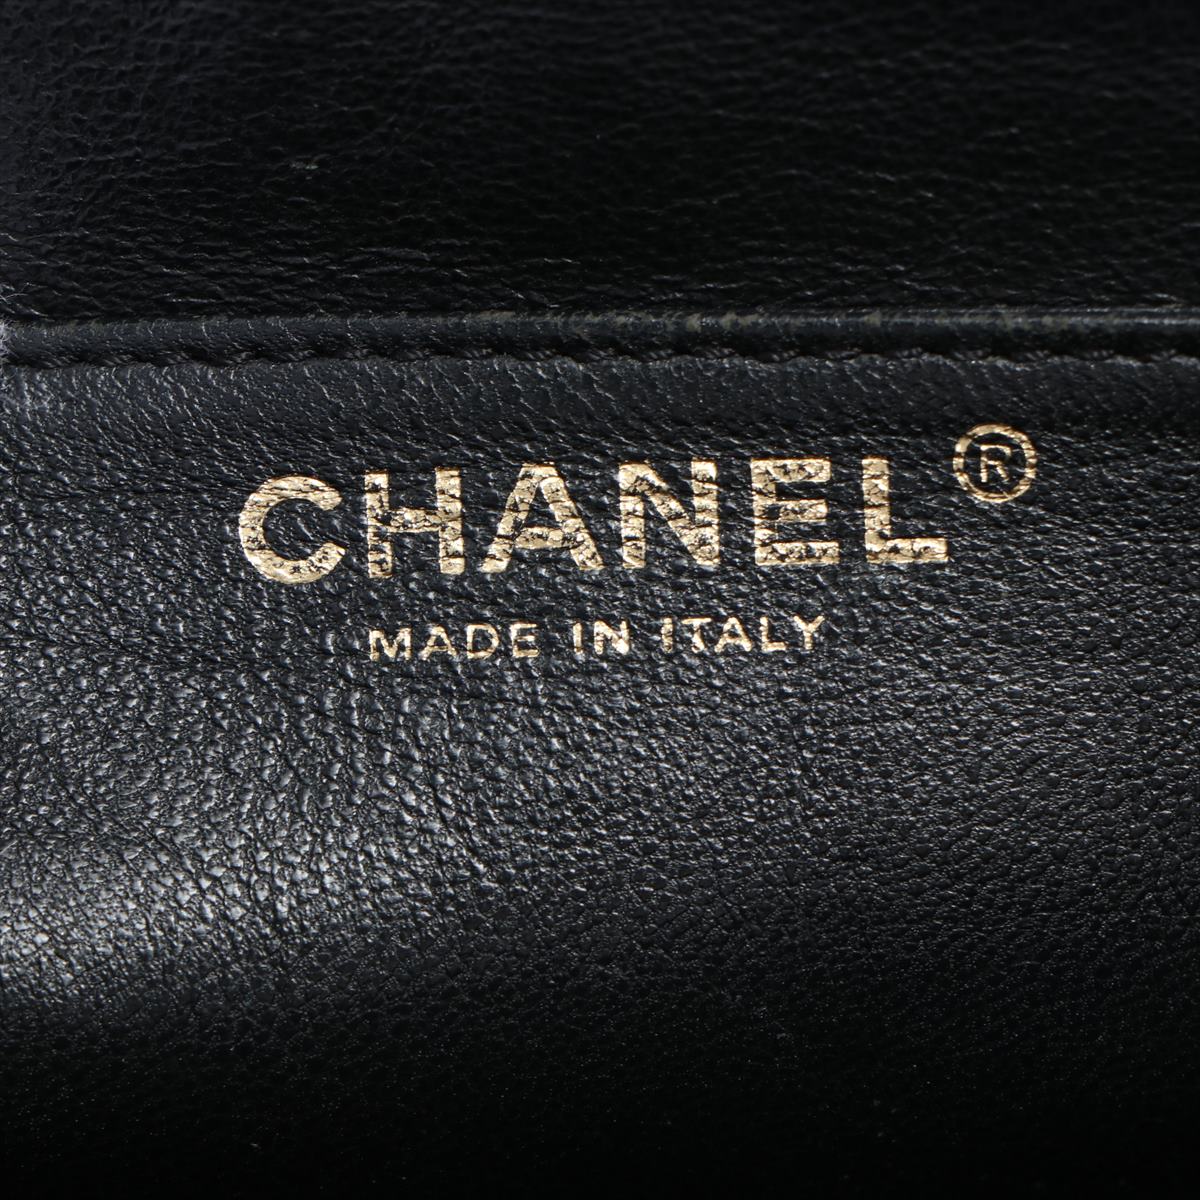 Chanel Mattress Caviar S Handbag Black Silver Gold